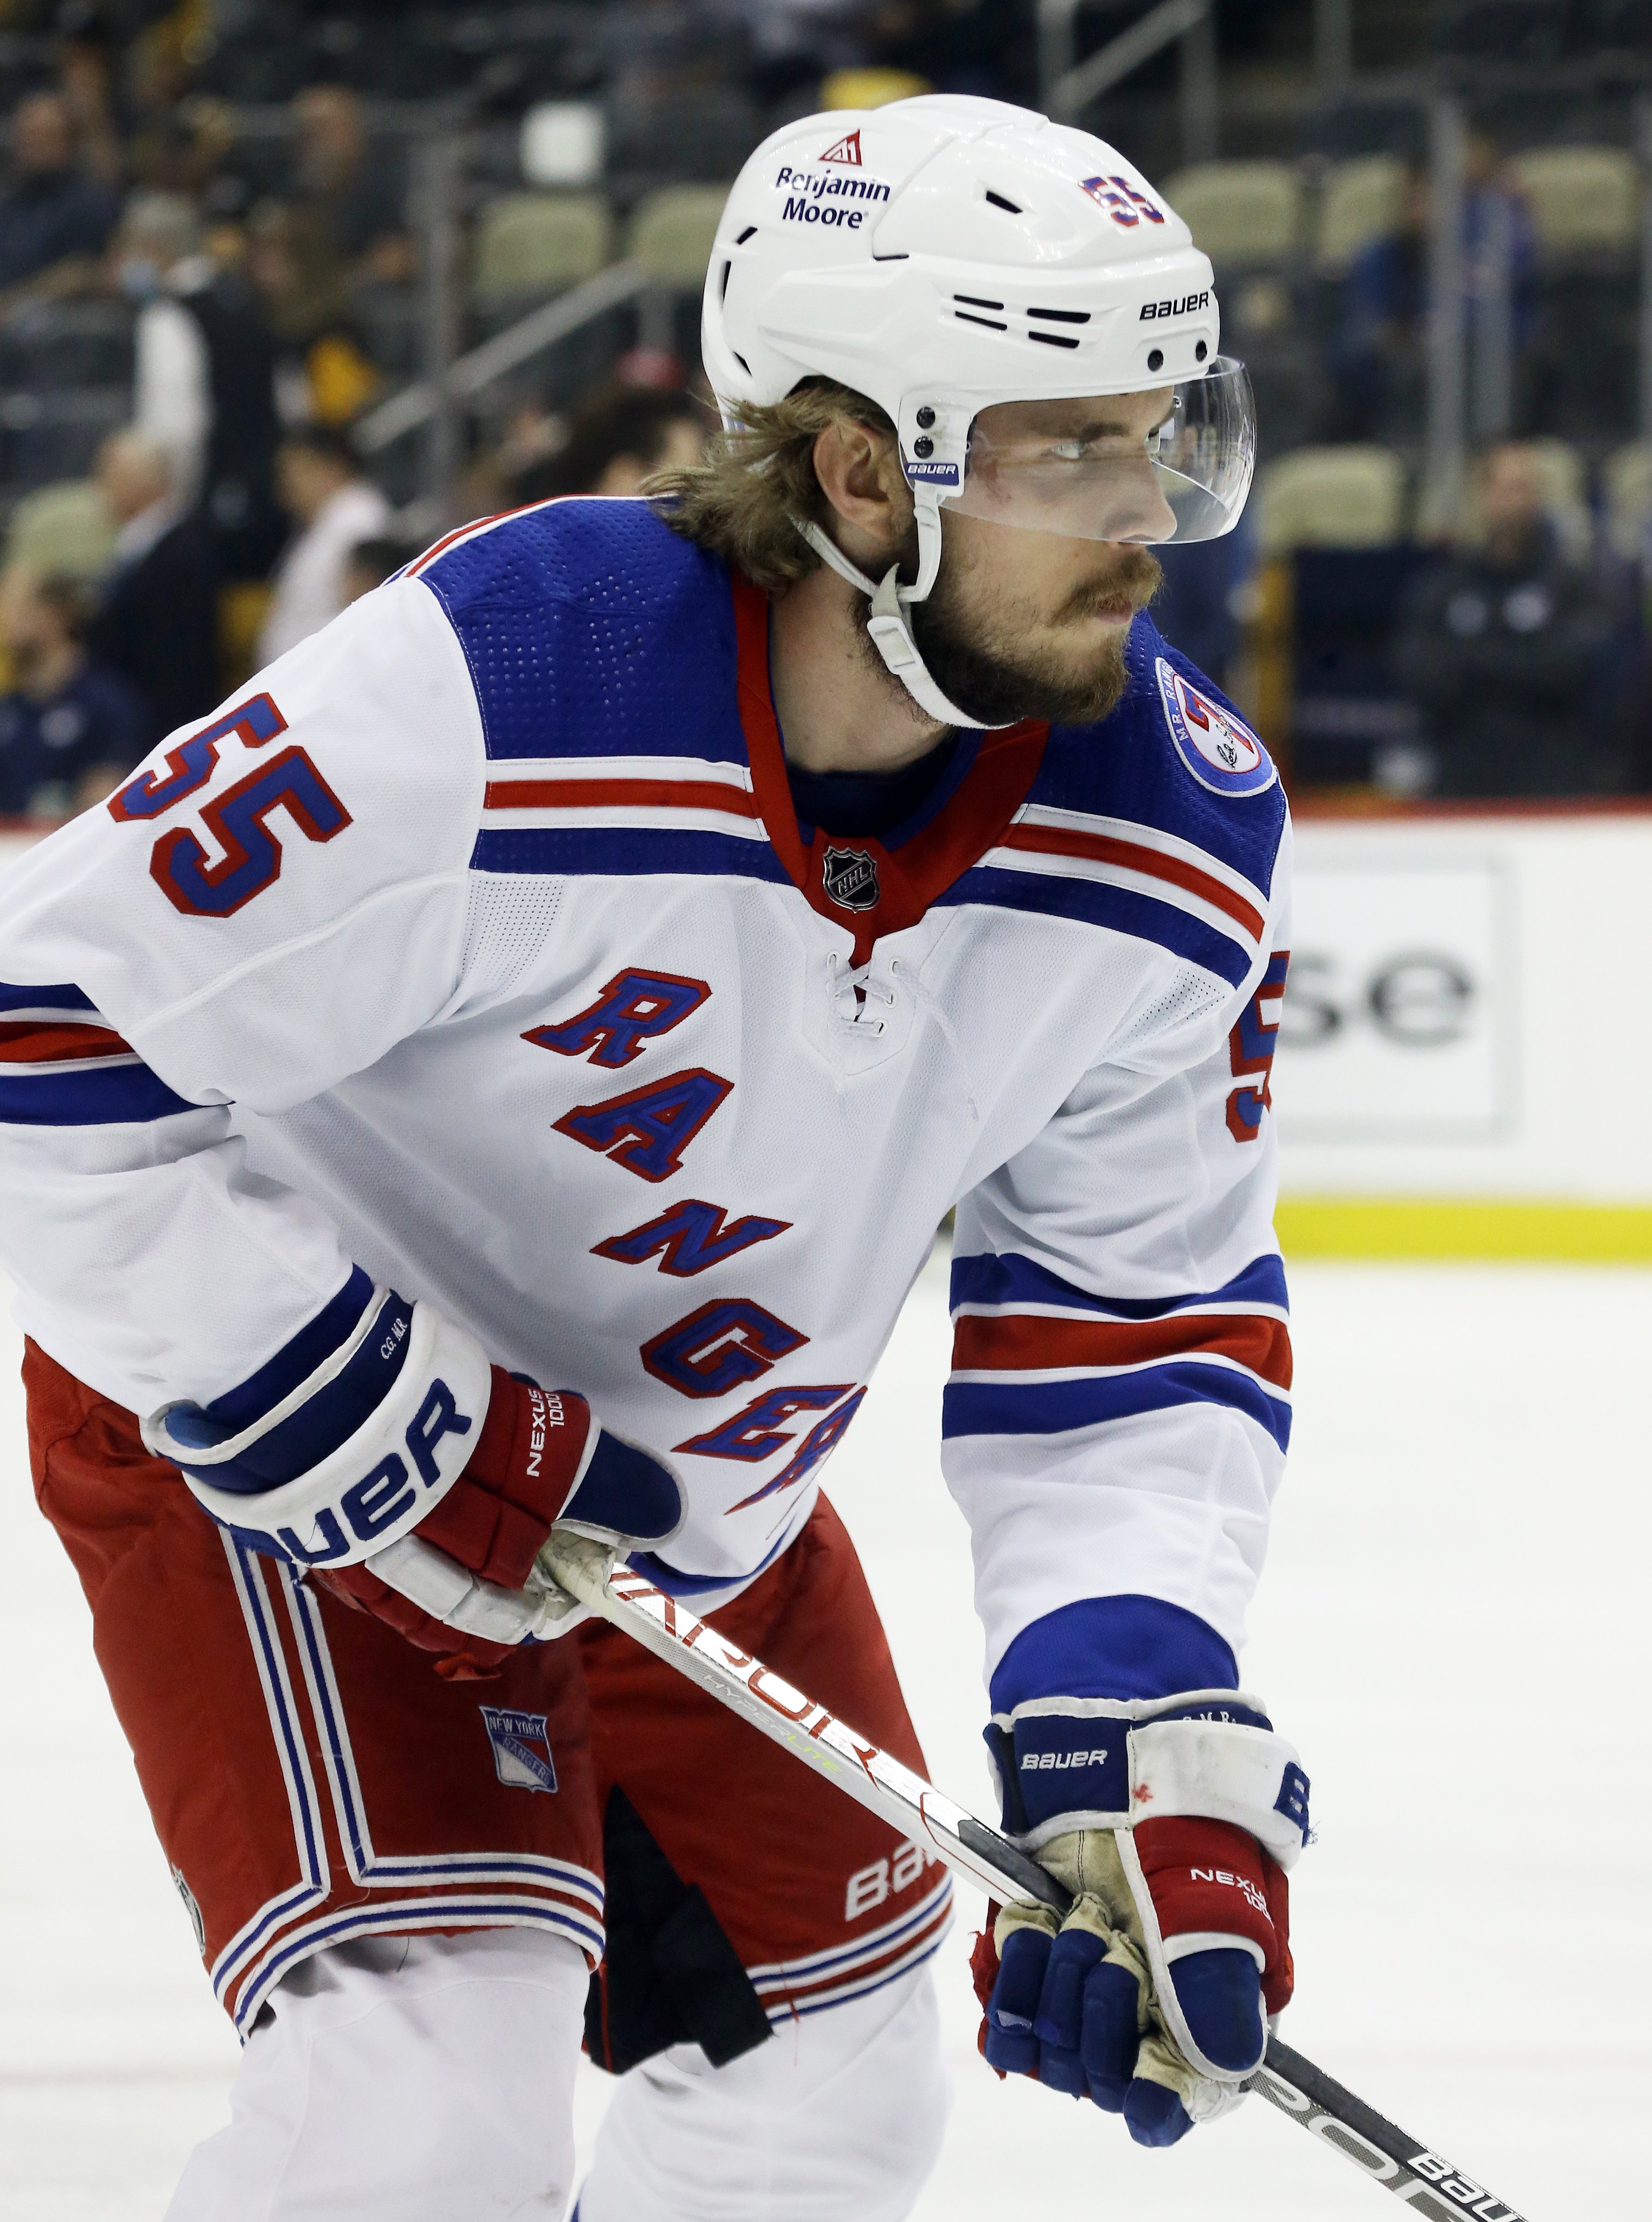 Adidas NHL Hockey Men's New York Rangers Henrik Lundqvist #30